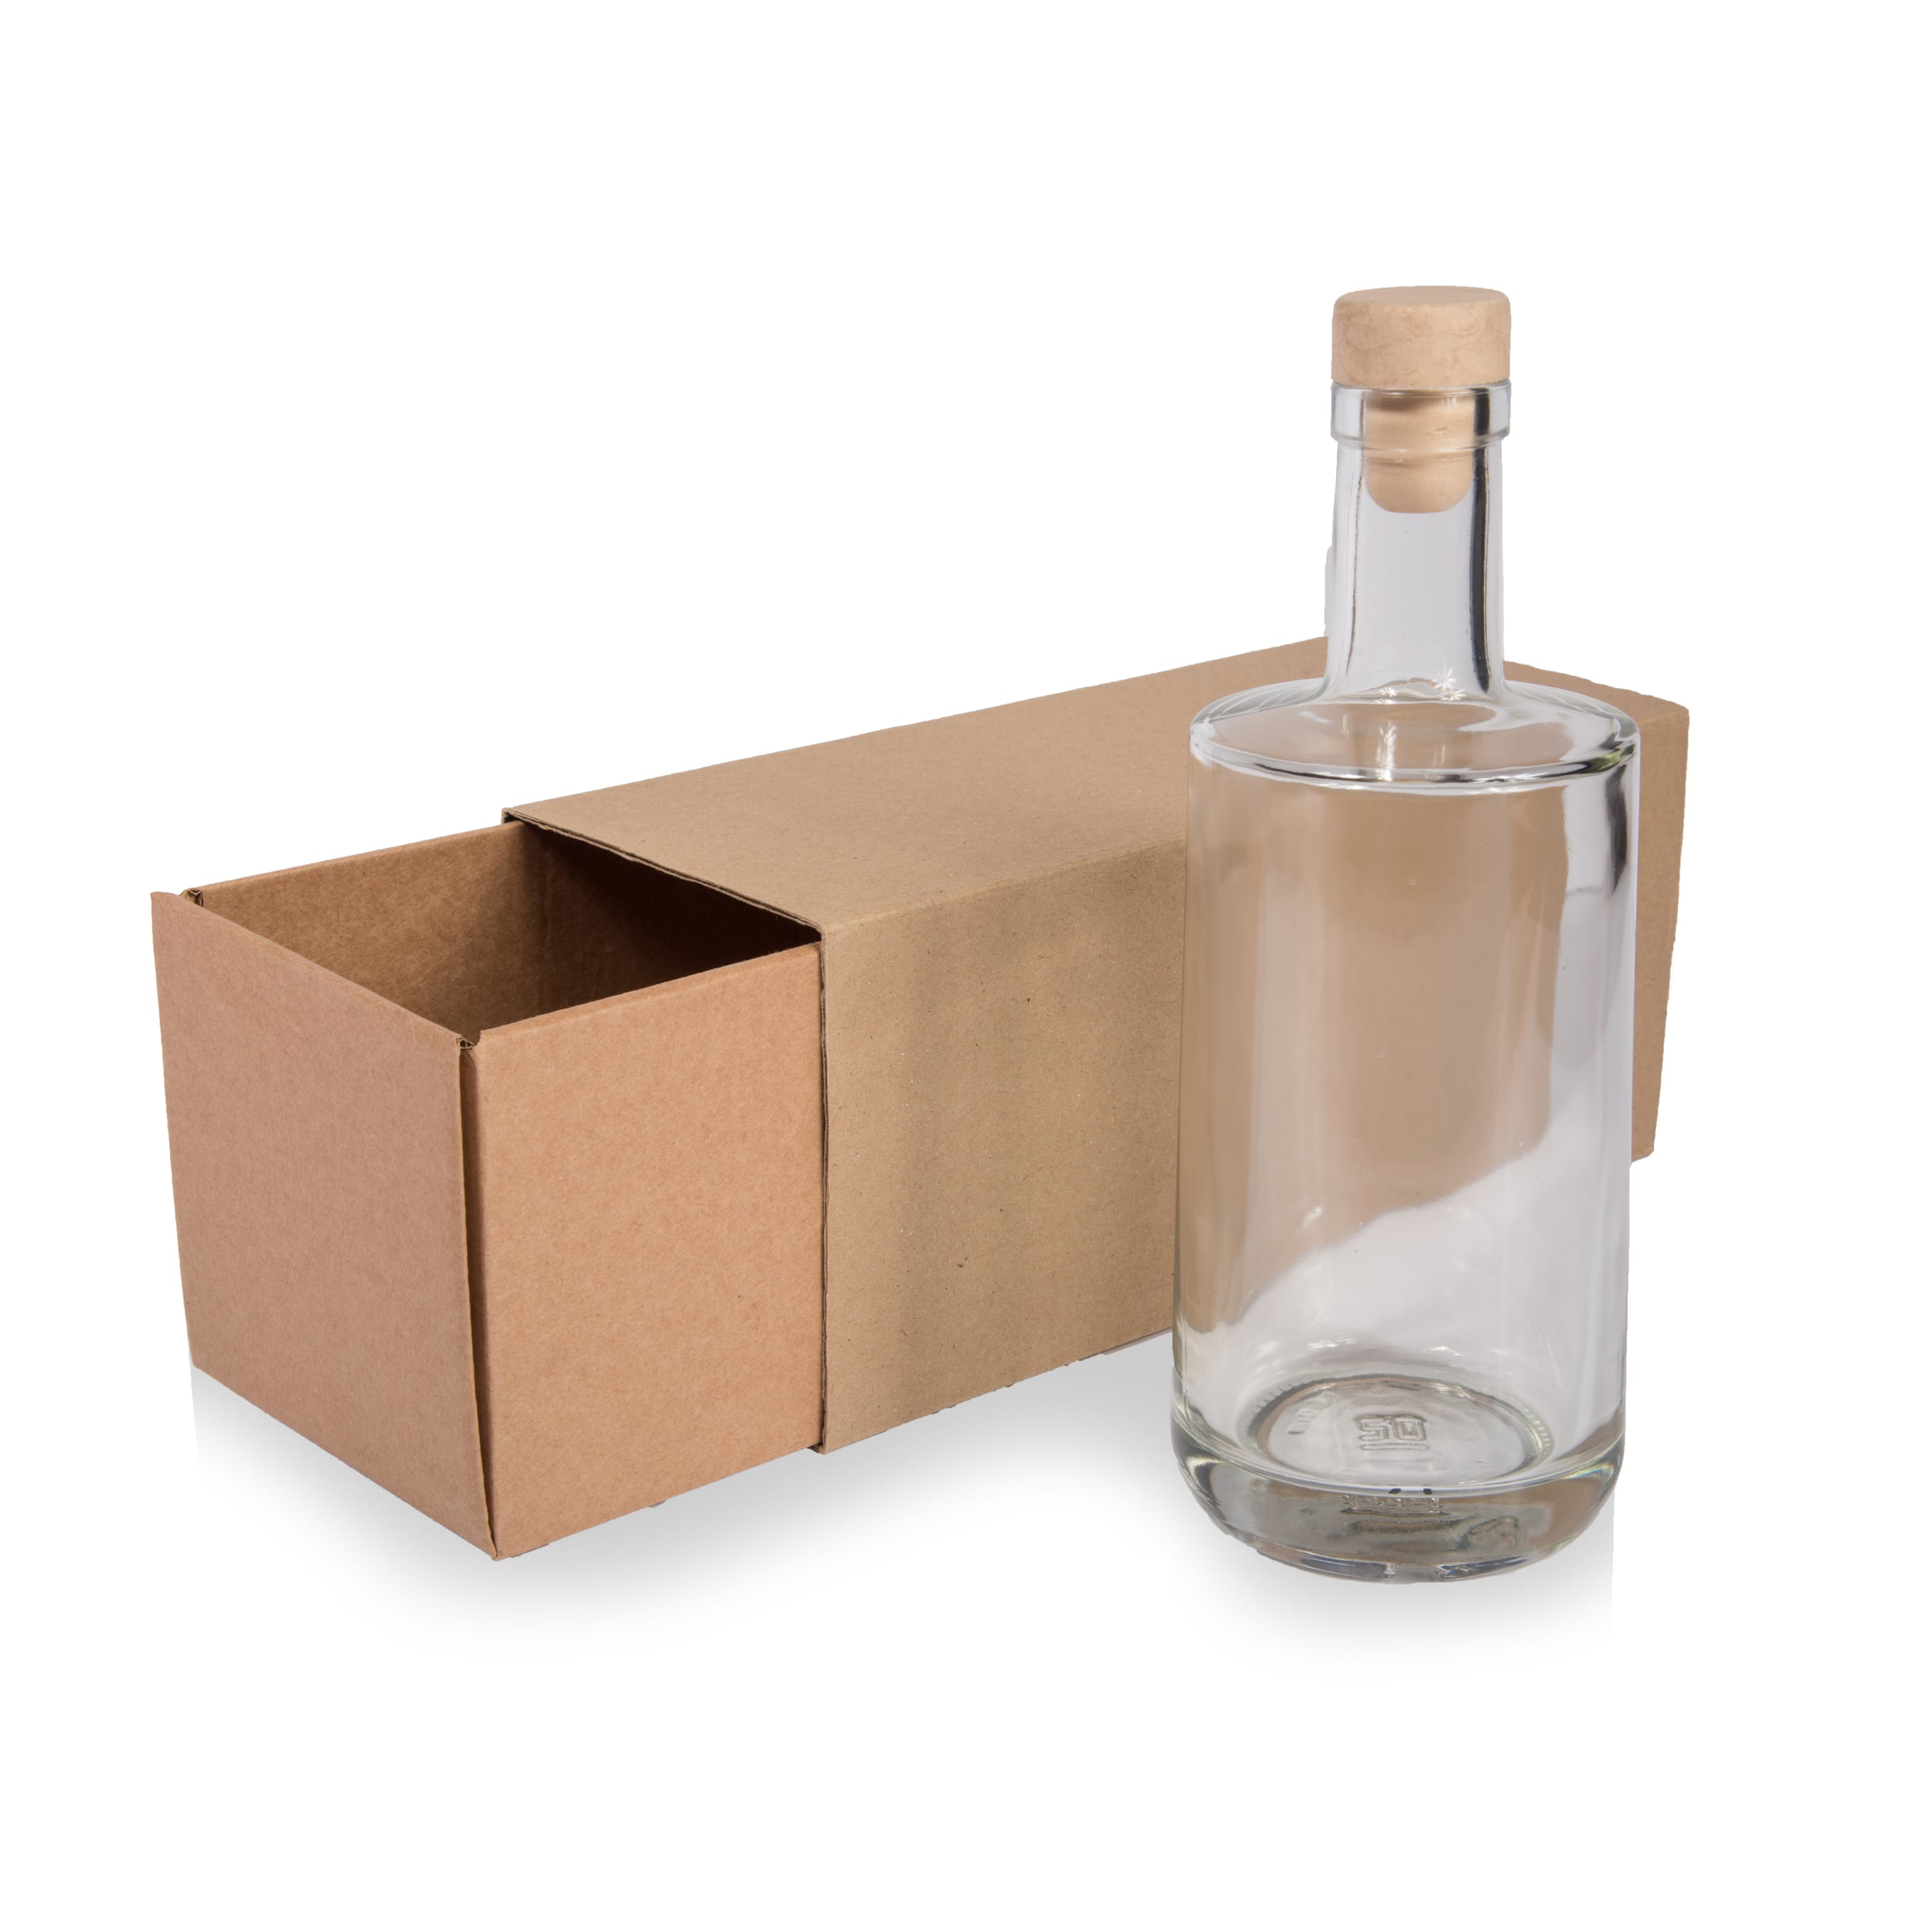 Single 70cl Gin Bottle Gift Box 